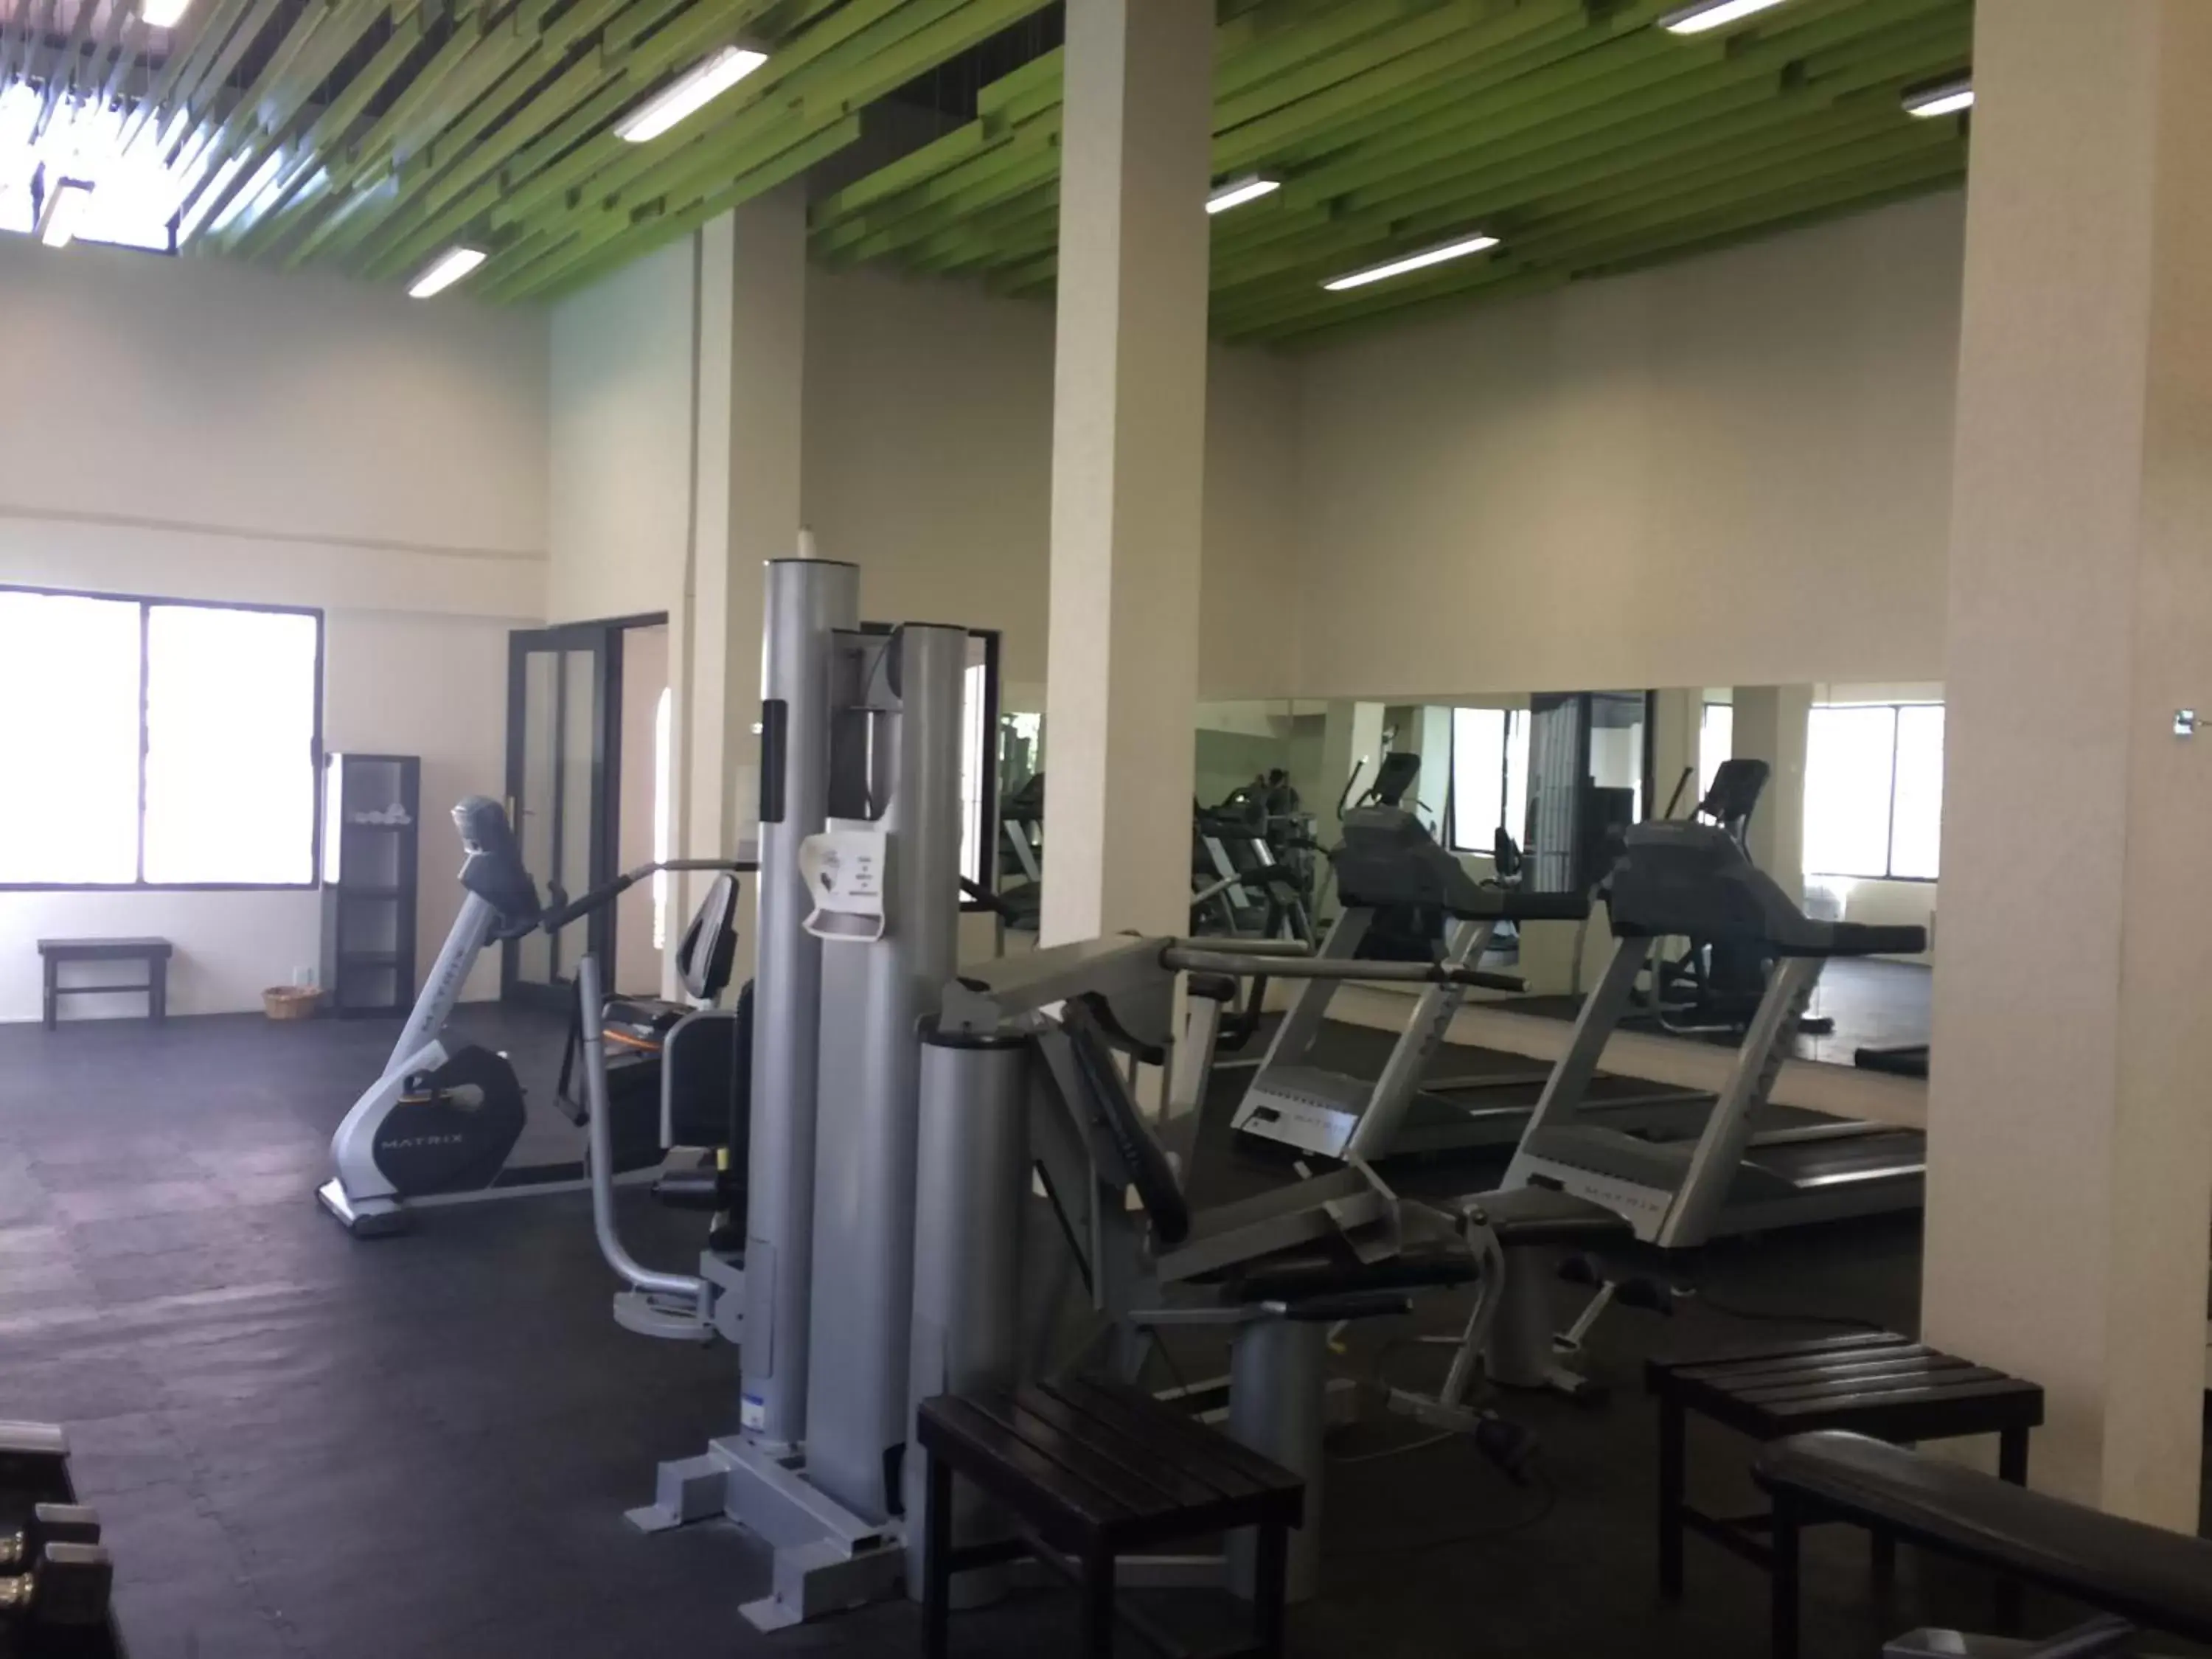 Fitness centre/facilities, Fitness Center/Facilities in Radisson Hotel & Convention Center Toluca